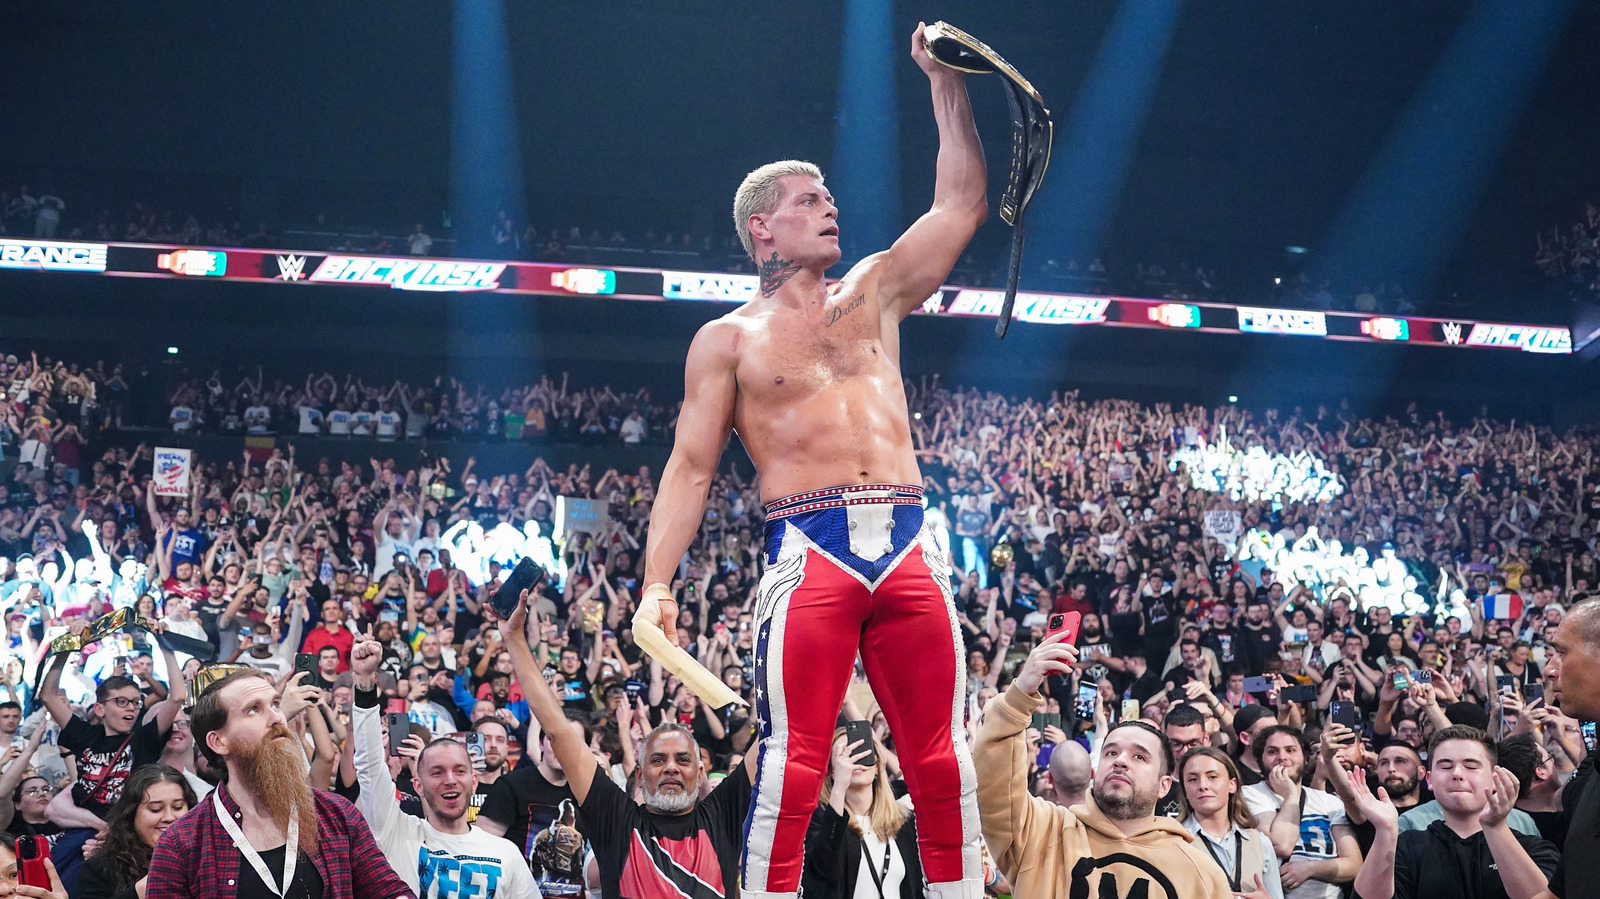 Mark Henry & Bully Ray Critique Cody Rhodes Vs. AJ Styles From WWE Backlash